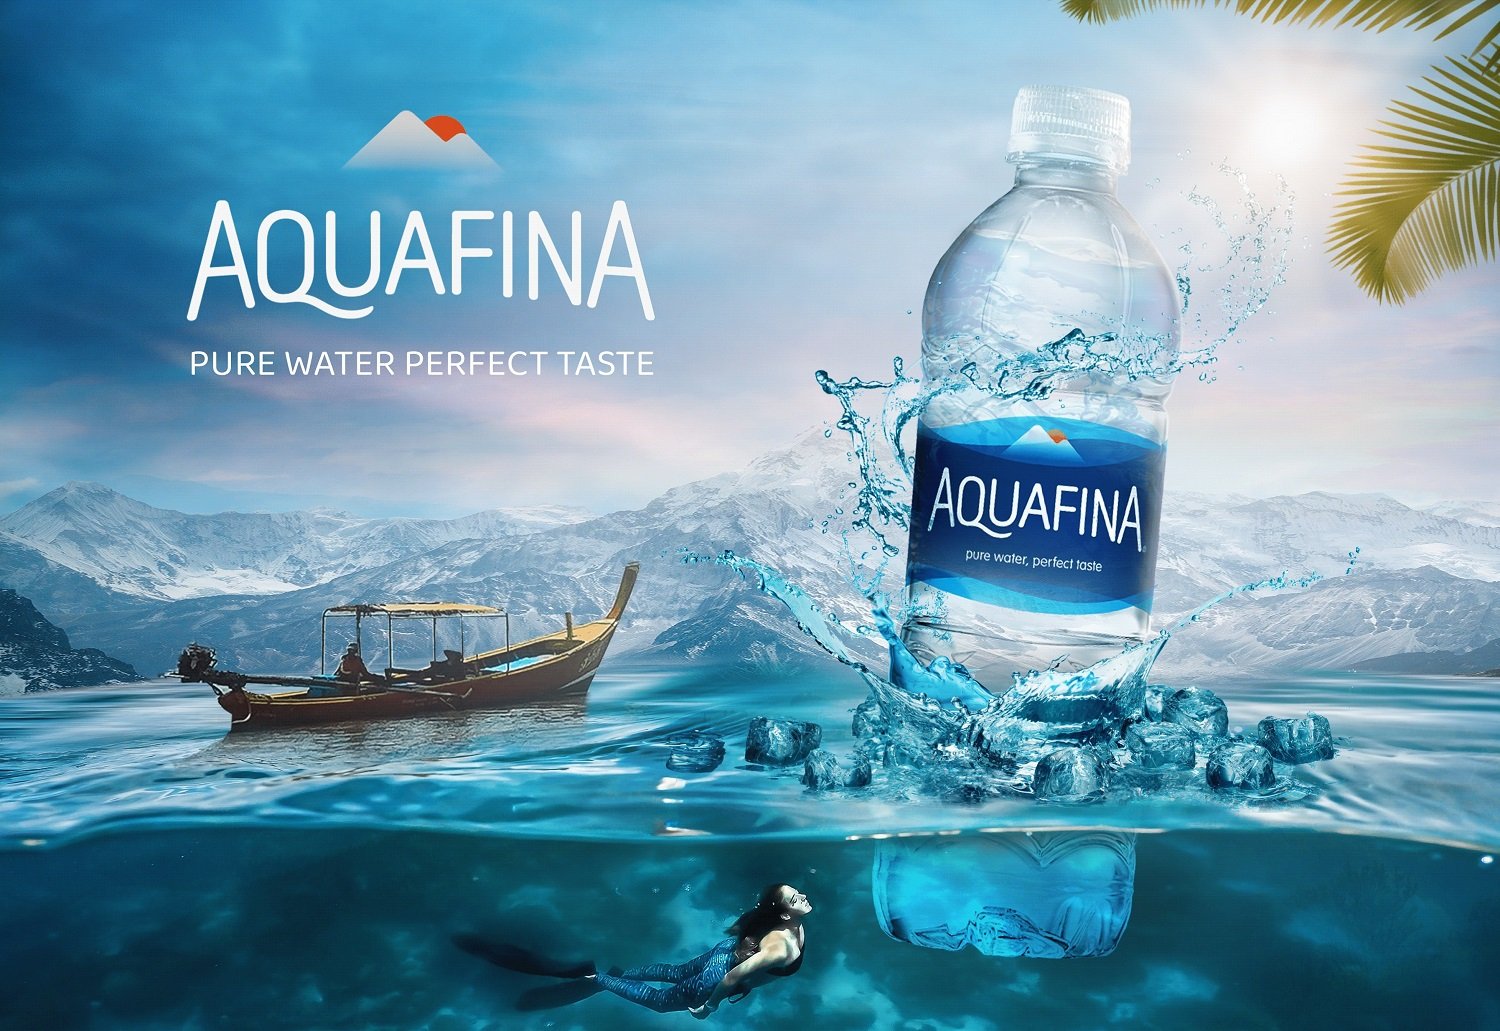 Marketing Strategy of Aquafina